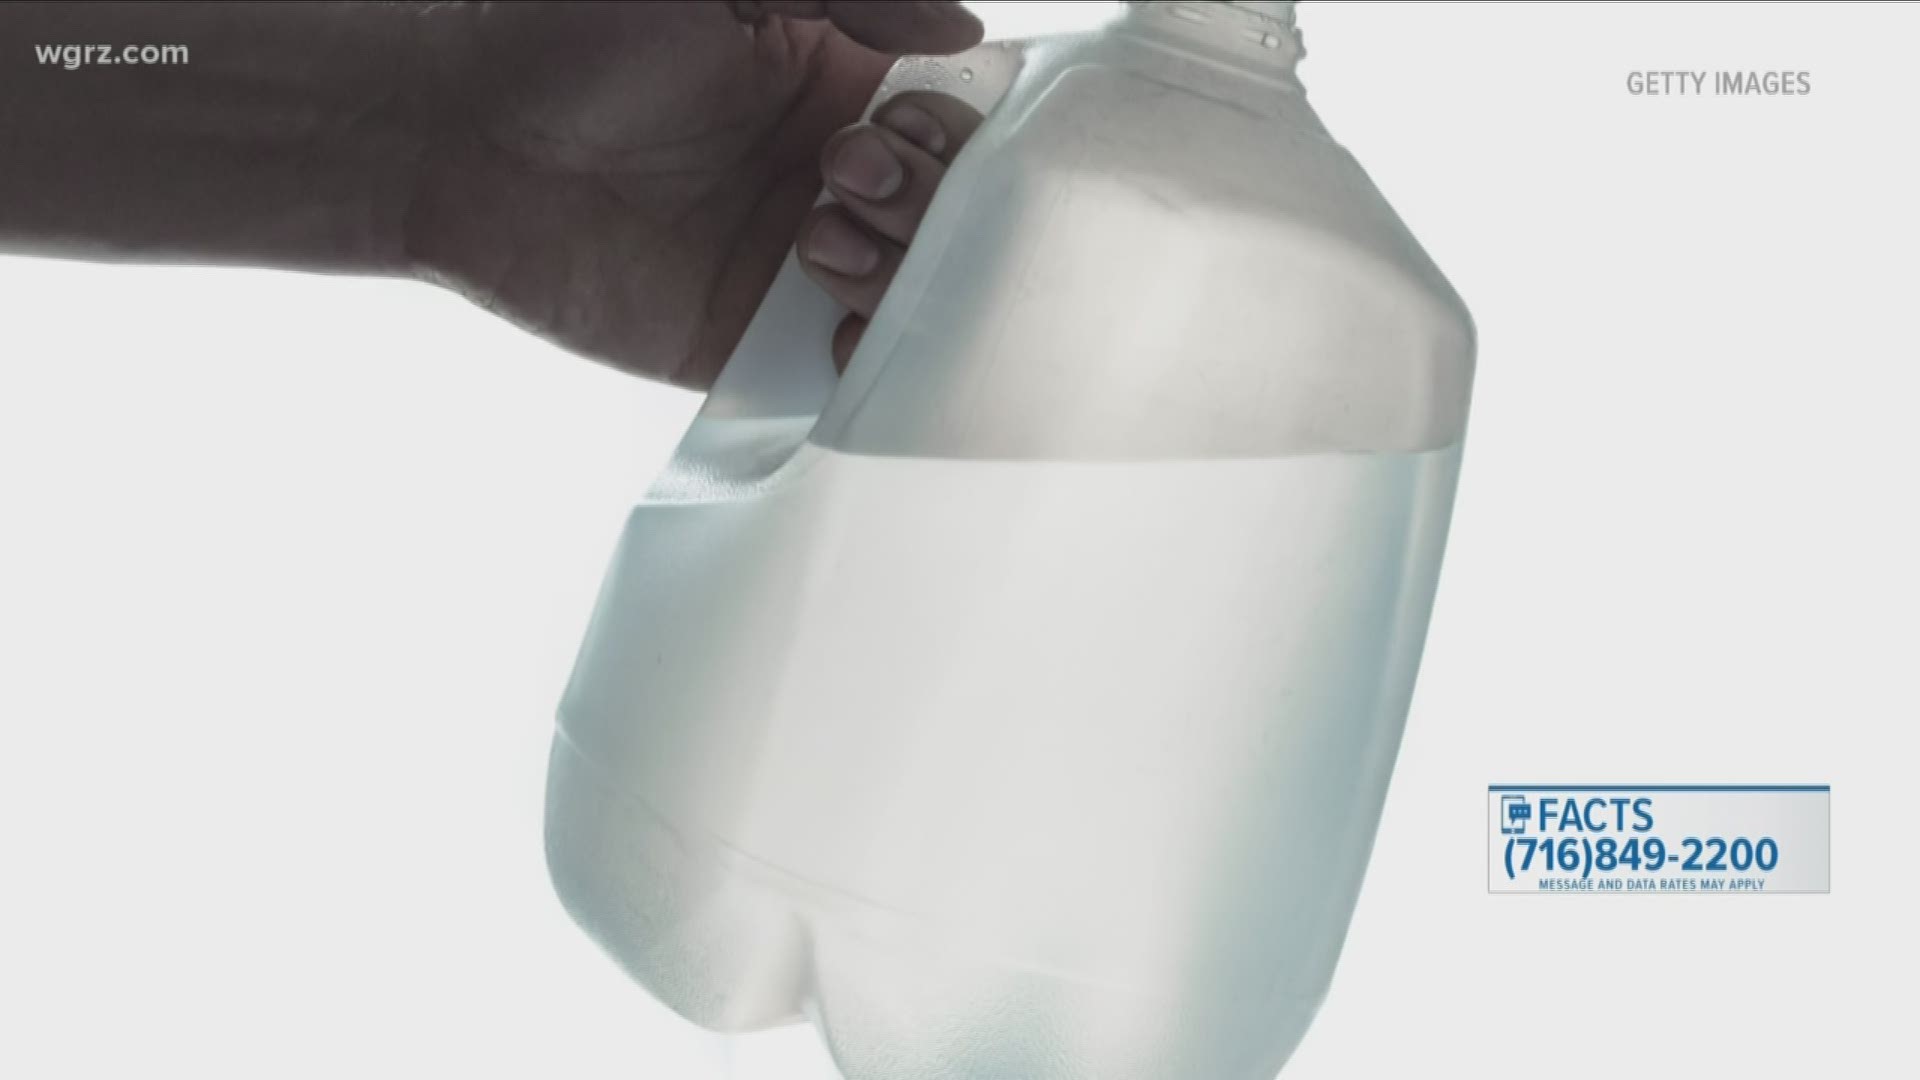 Wegmans limiting 4 1-gallon water jugs per order